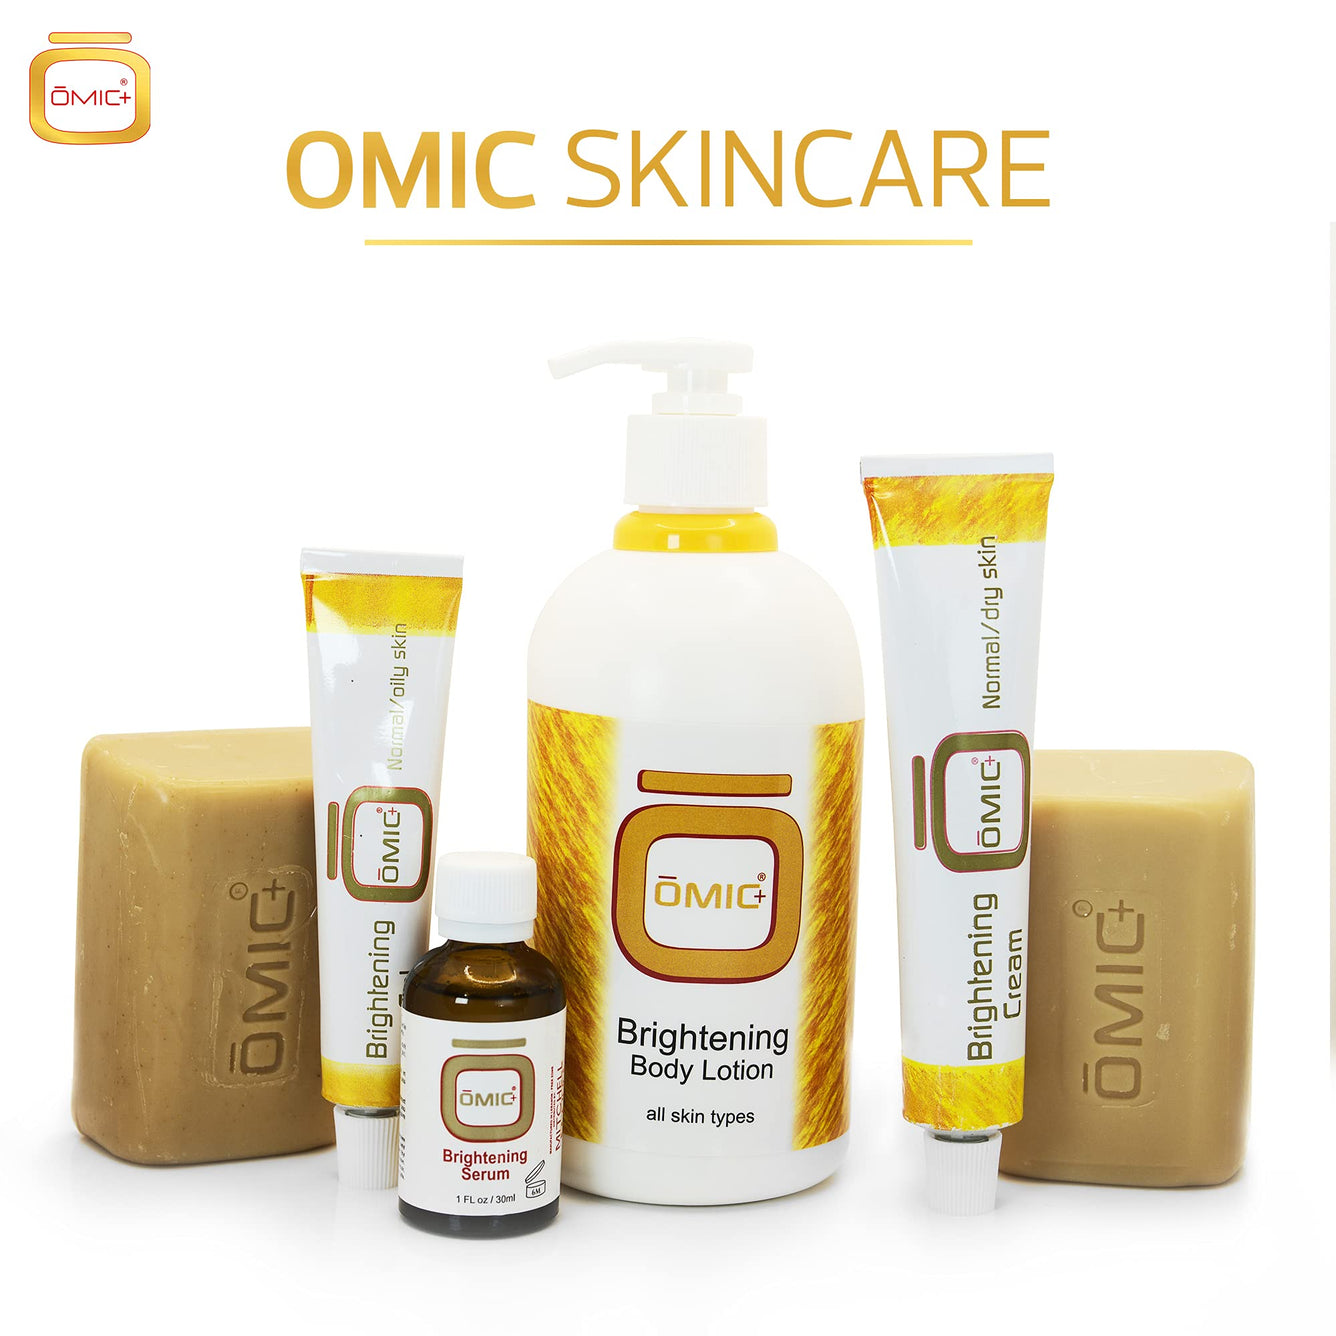 OMIC Brightening Gel - 30g OMIC Original - Mitchell Brands - Skin Lightening, Skin Brightening, Fade Dark Spots, Shea Butter, Hair Growth Products